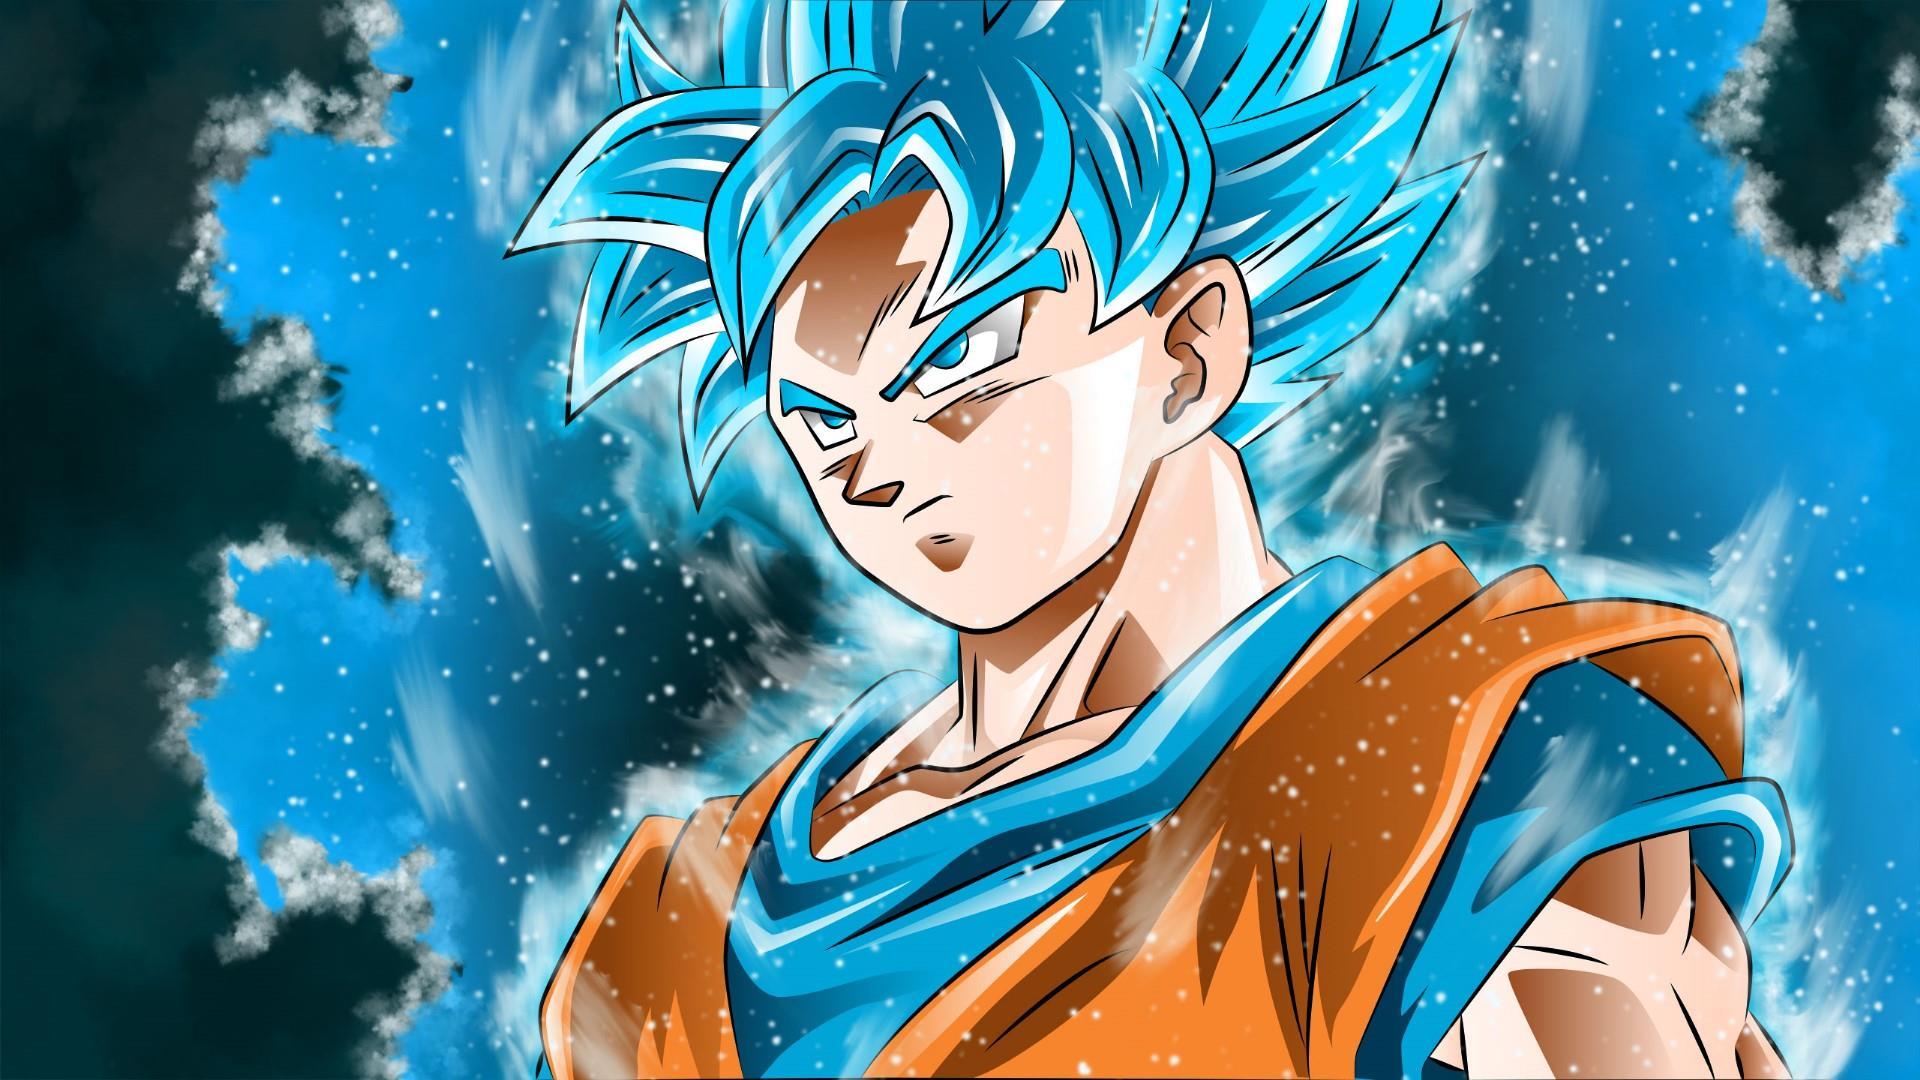 1920x1080 Hình nền Goku Super Sayajin Blue.  Wallpaper Studio 10